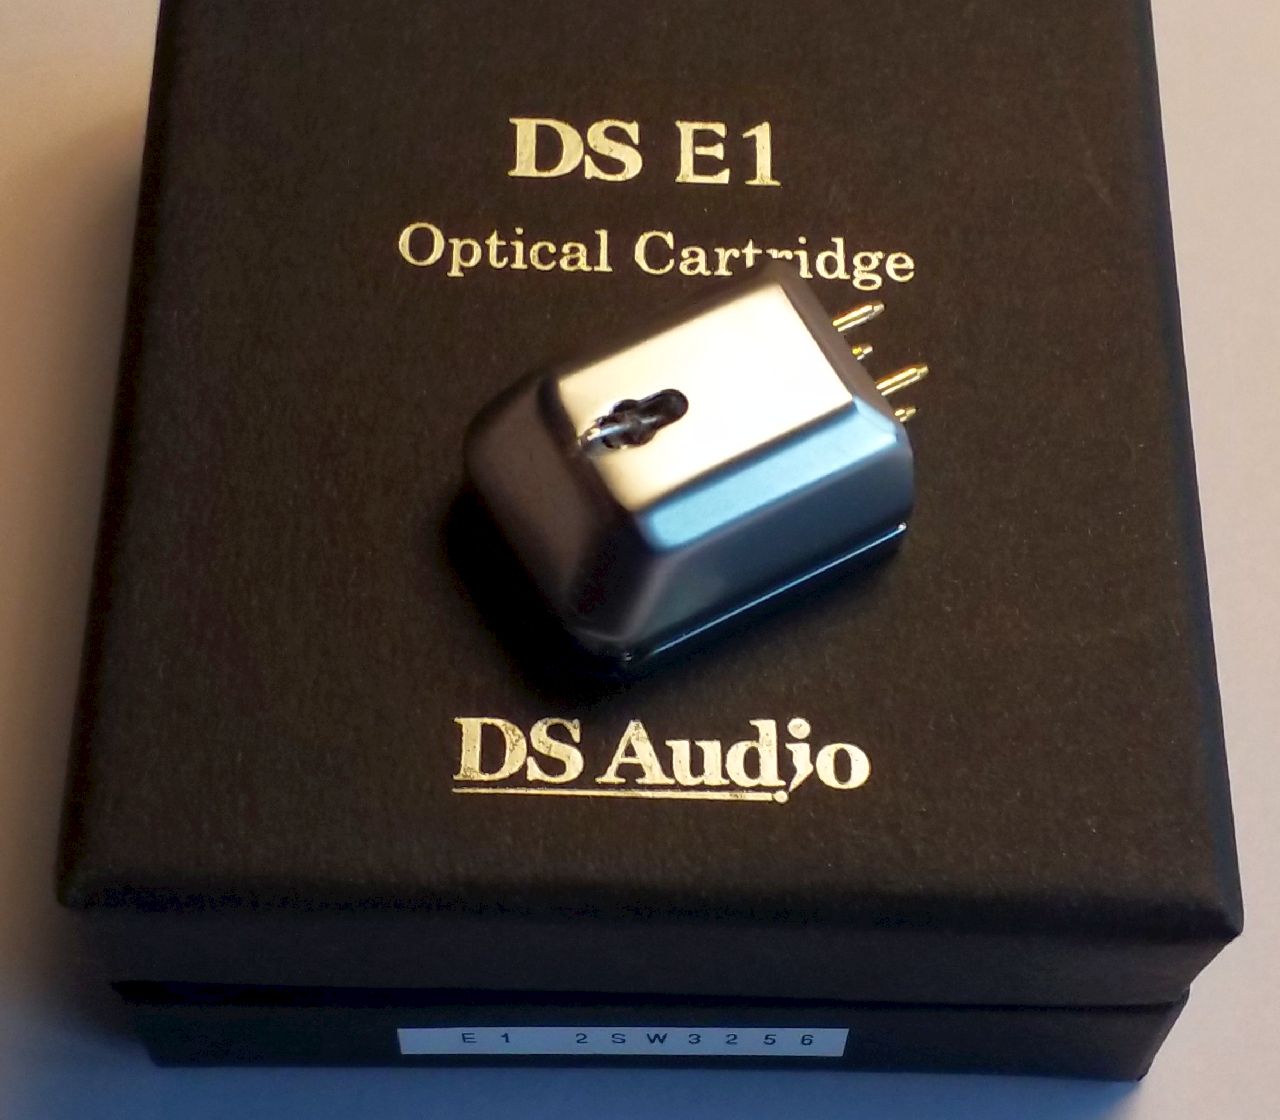 DS-E1 on box